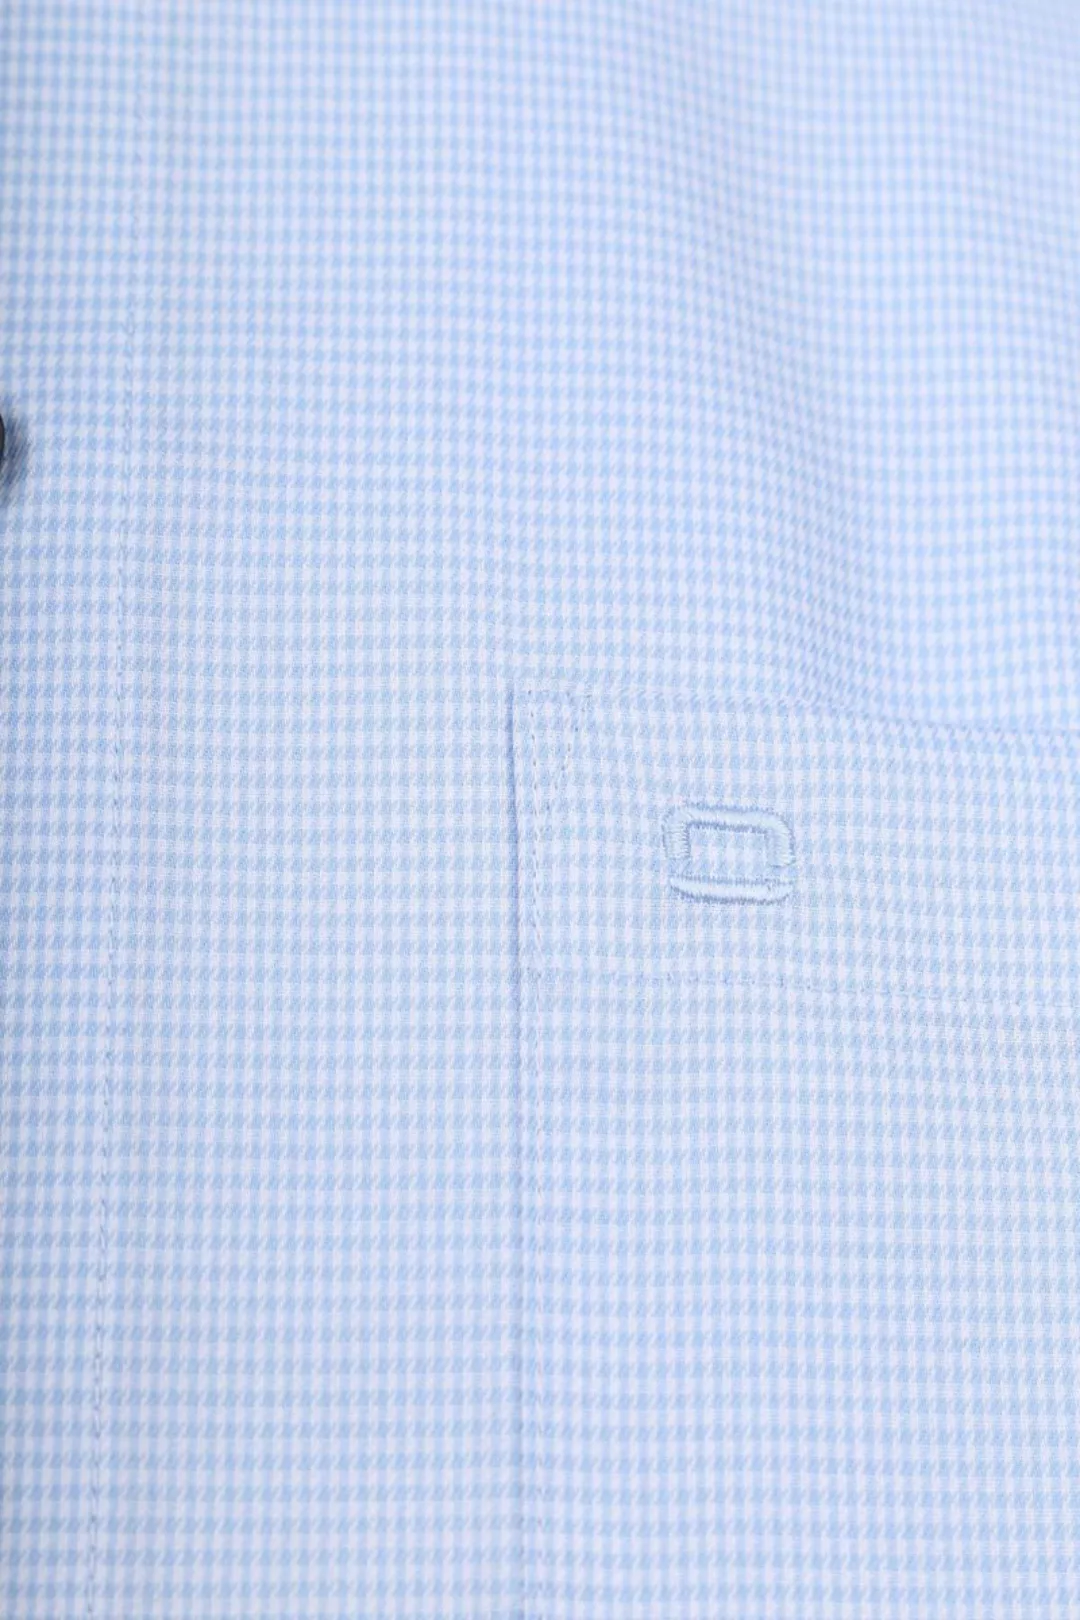 OLYMP Luxor Hemd Pied De Poule Hellblau - Größe 44 günstig online kaufen